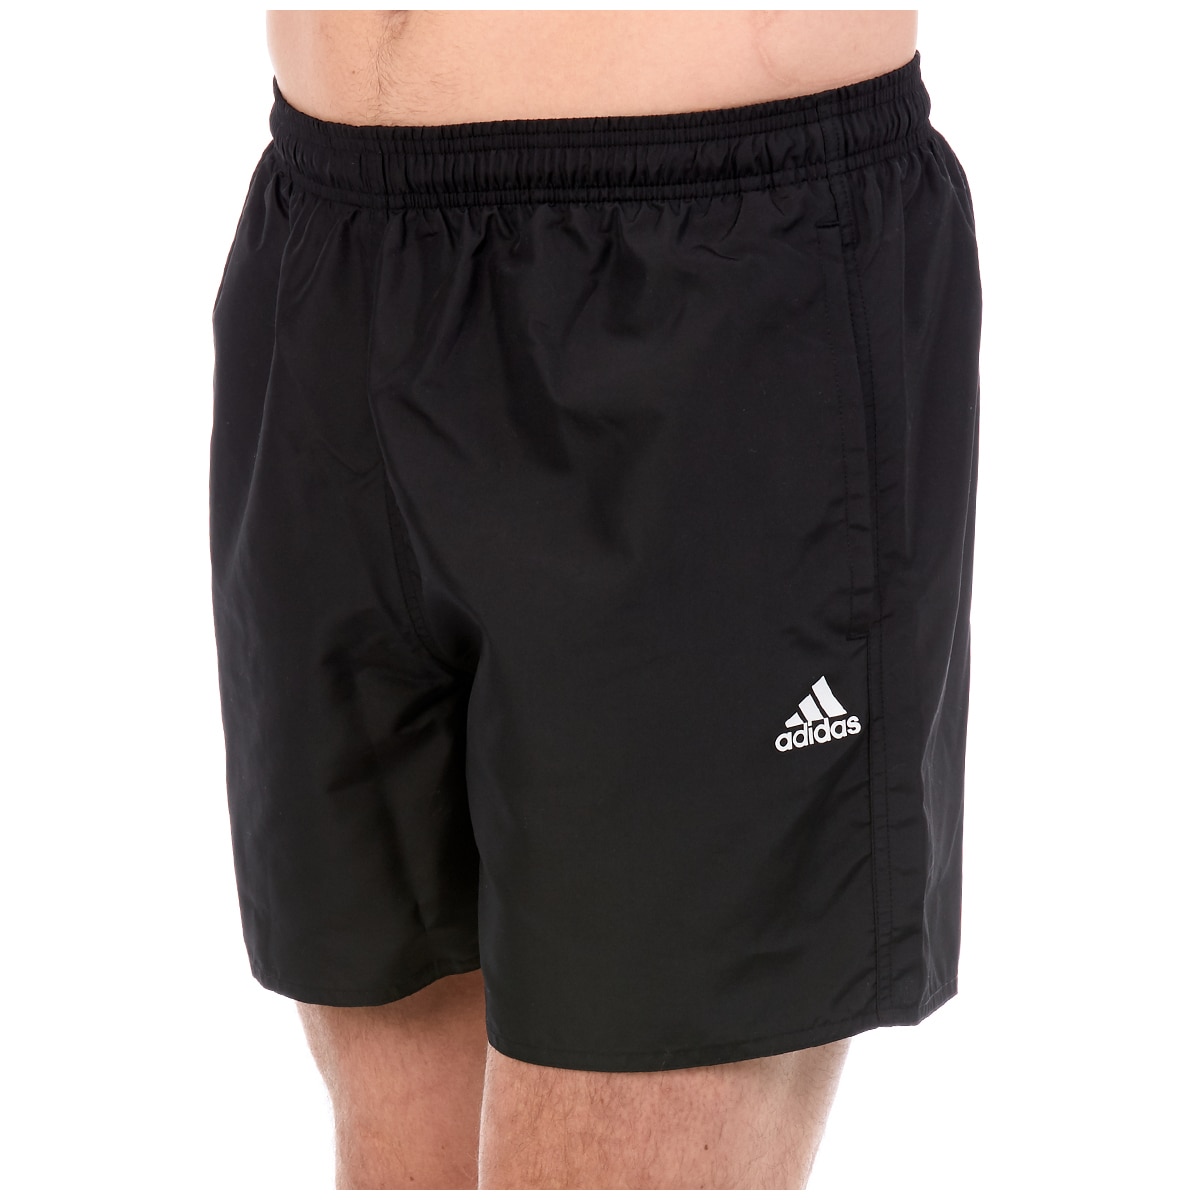 Adidas Swim Shorts - Black